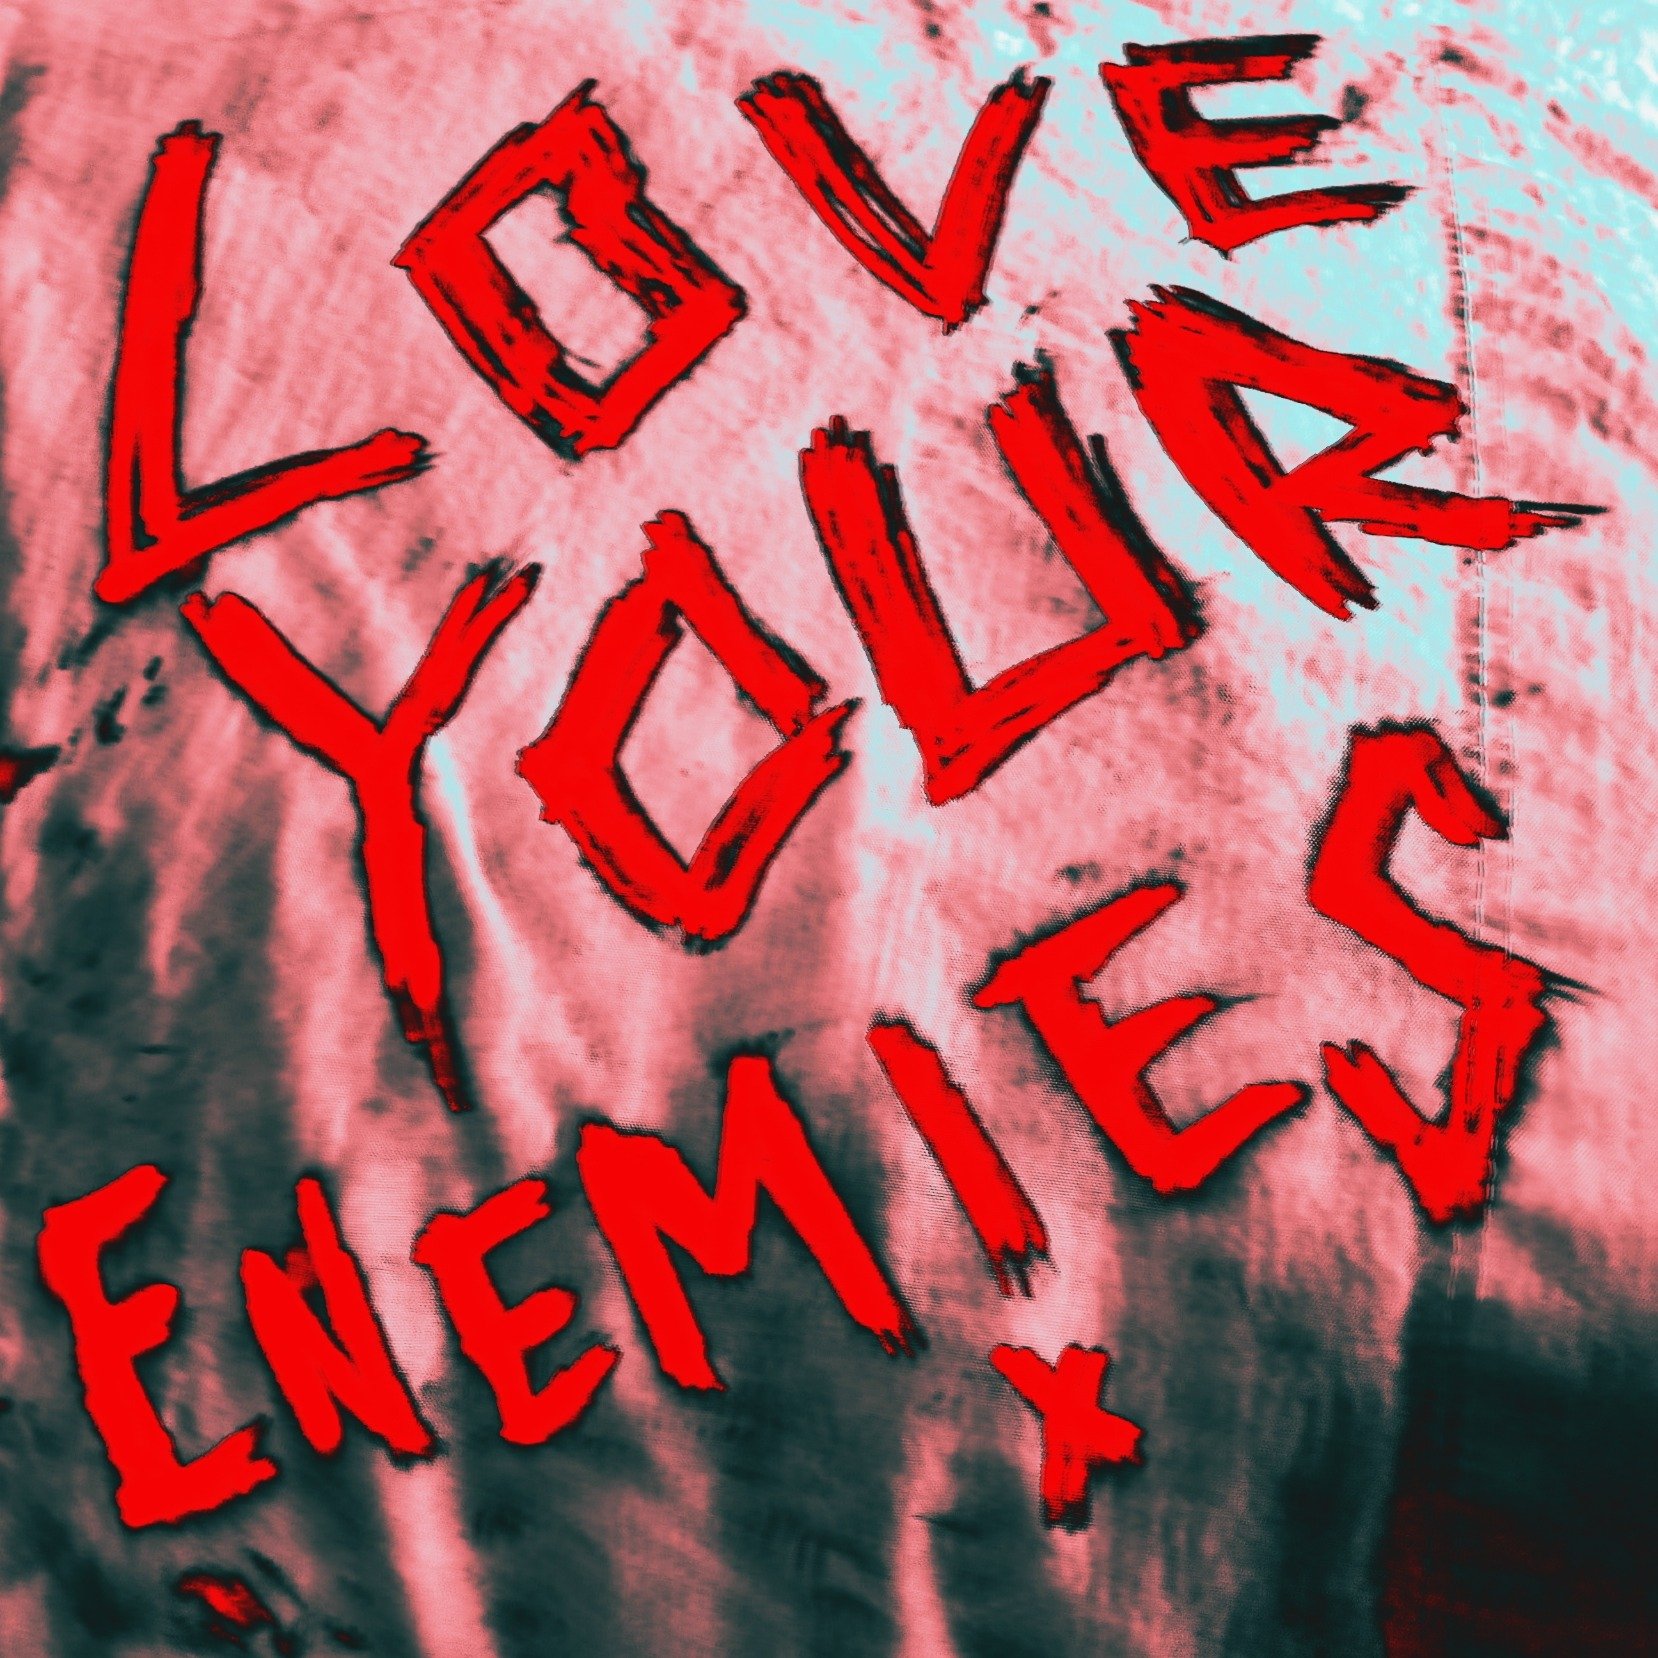 Love Your Enemies Records First Time On Cd Manta Birostris Cursed Eye Of The Prophet Pre Order Cd Here T Co Kpfkh3elu6 Doom Punk From Poland Polish Lyrics With English Titles Punk Metal Doom